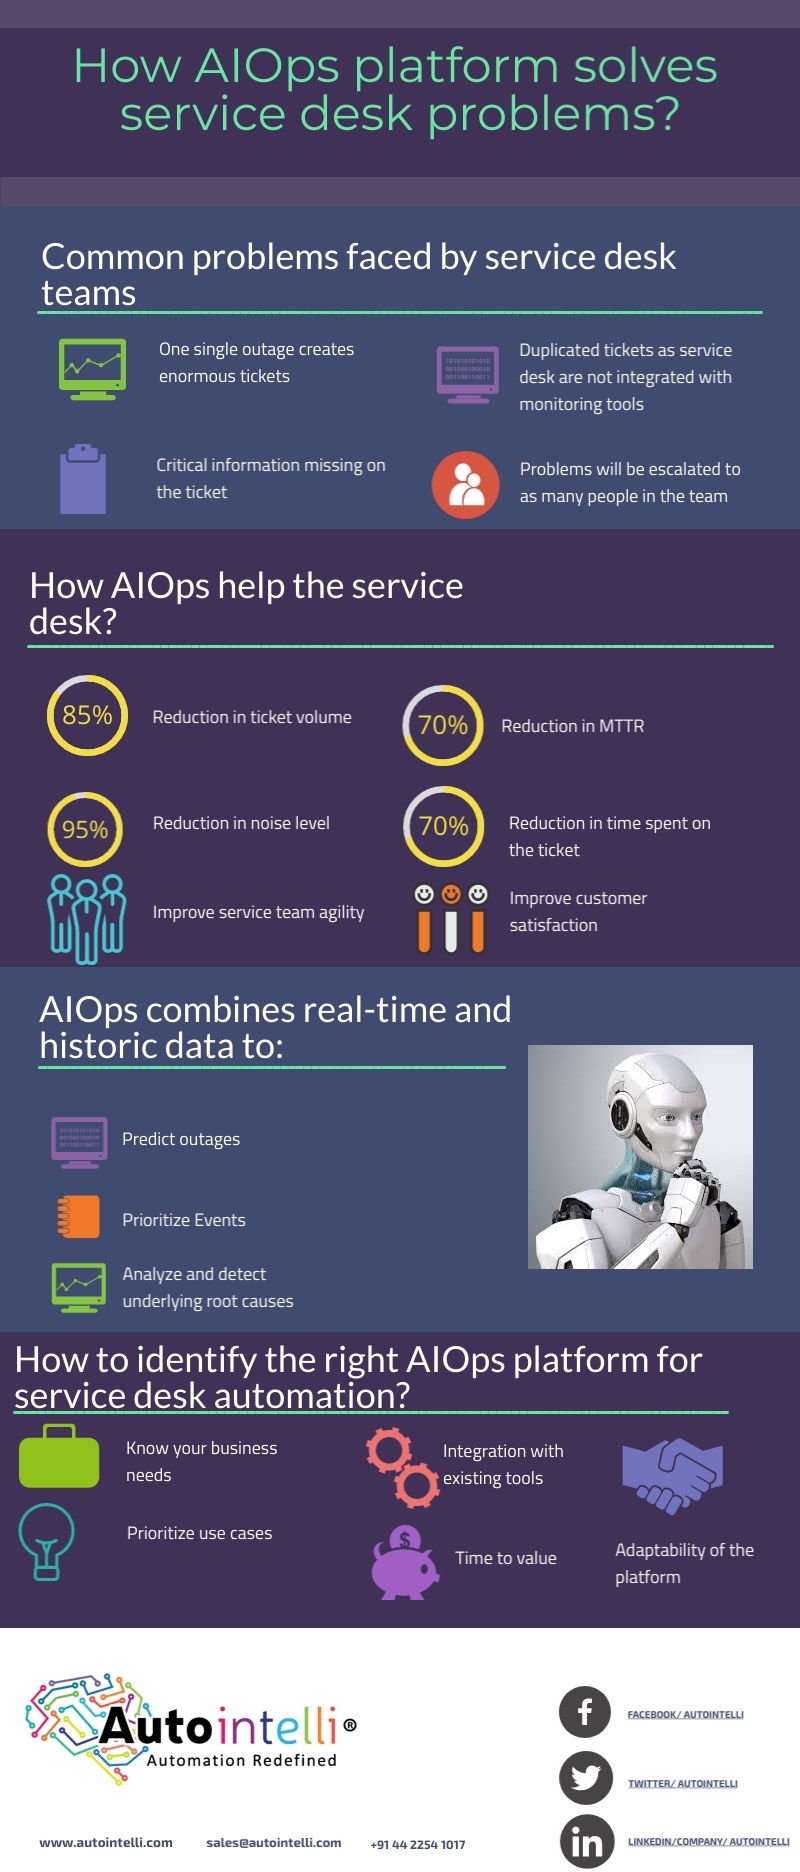 How AIOps Platform solves Service Desk Problems image